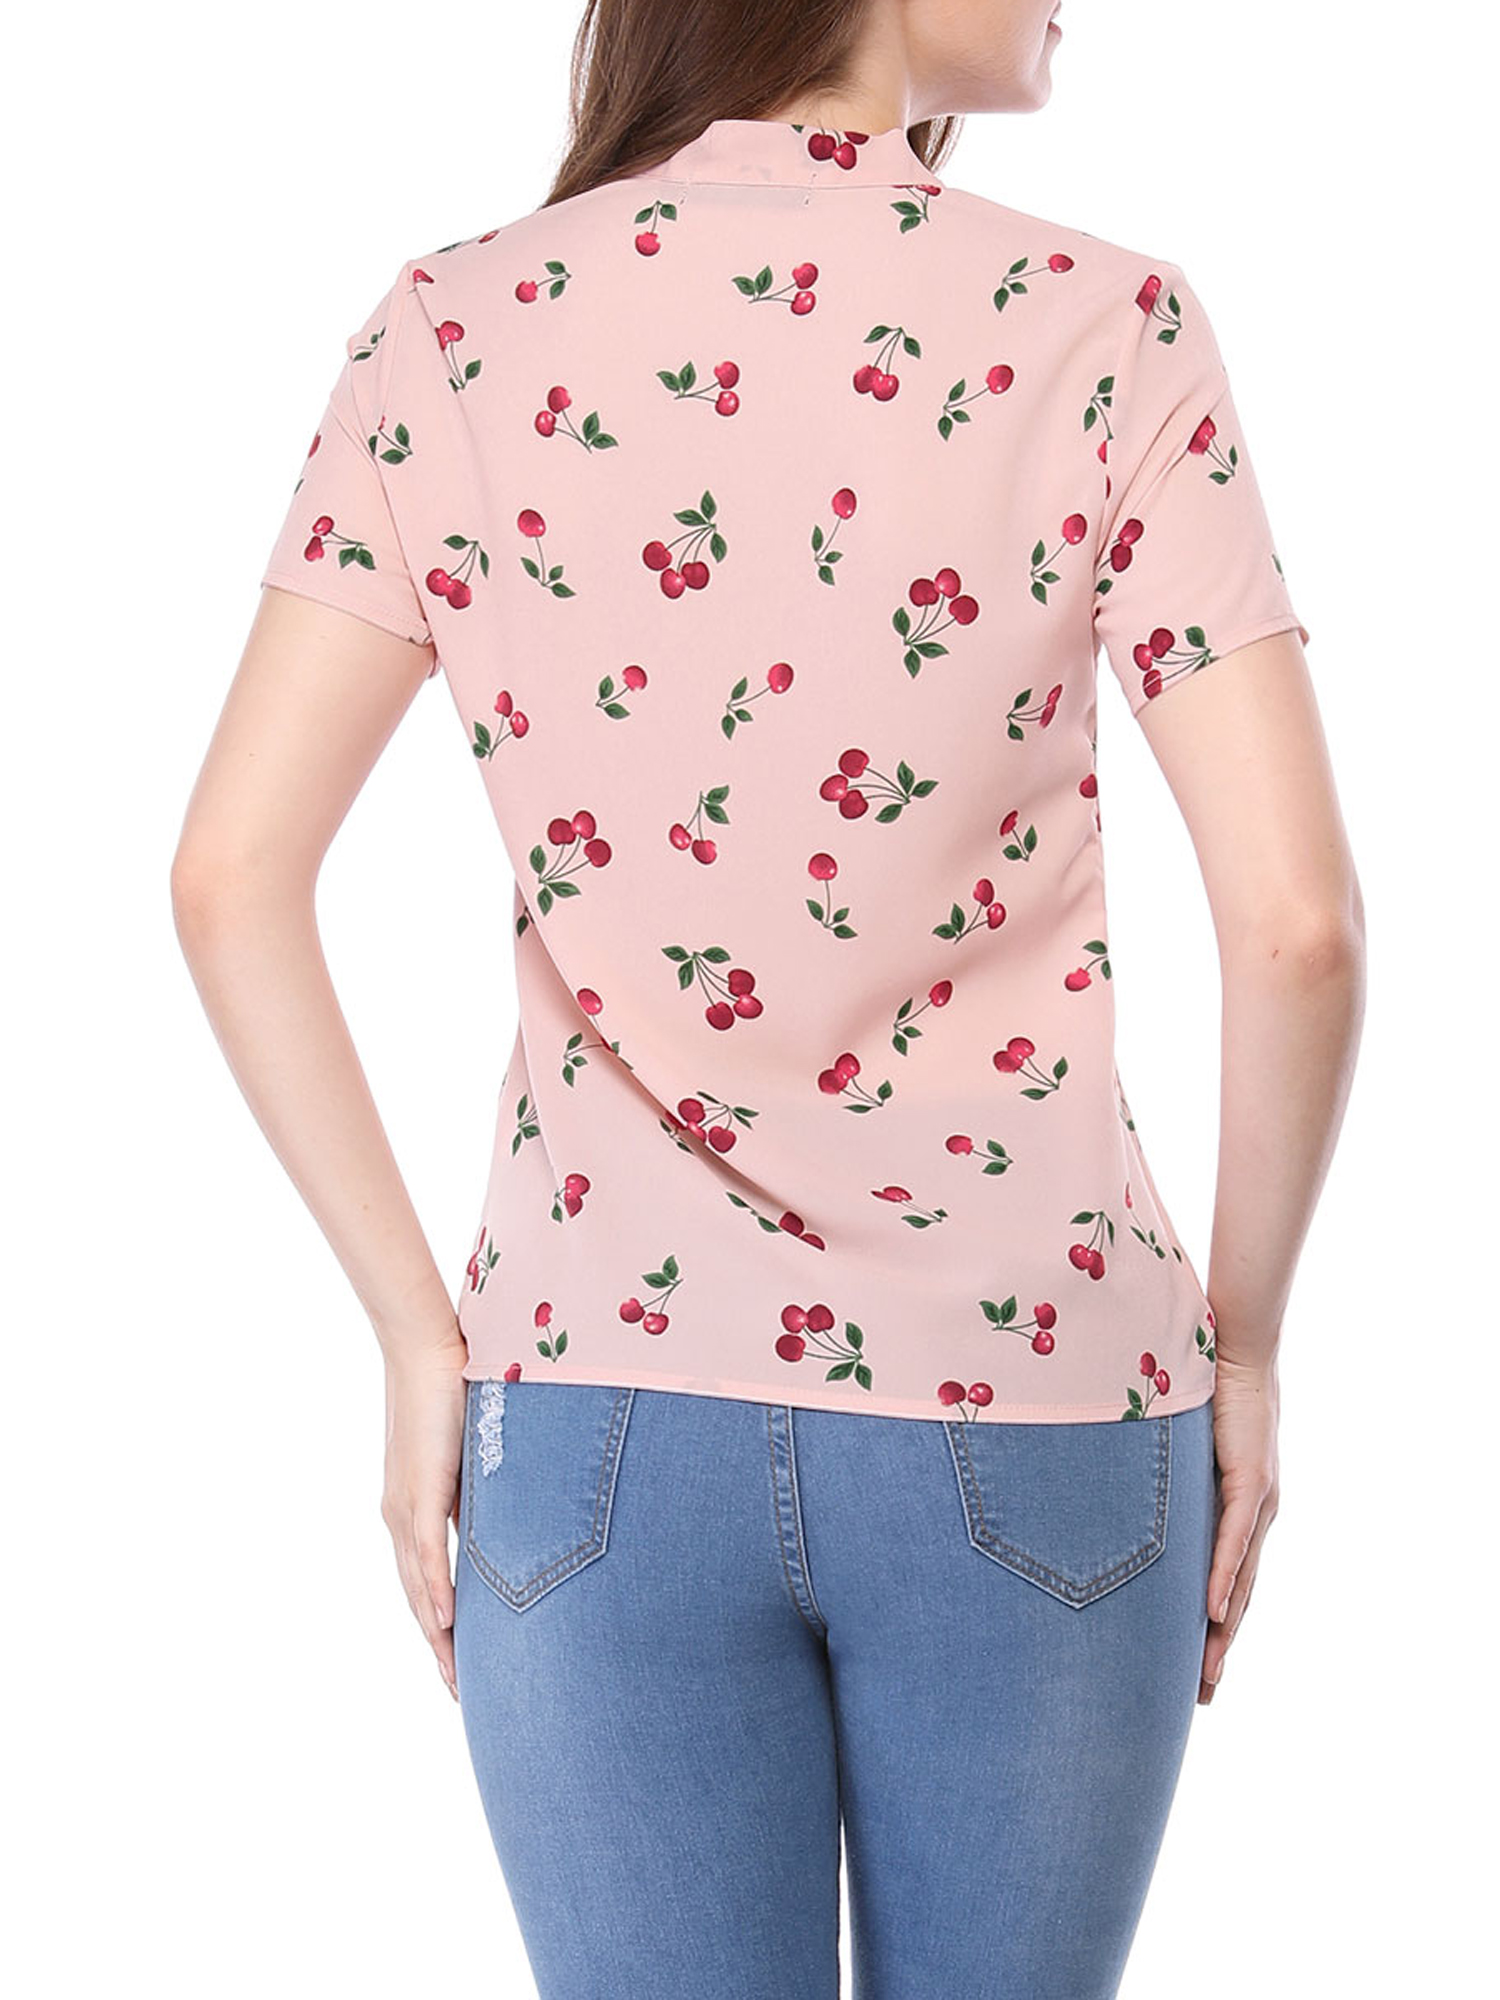 MODA NOVA Juniors Summer Top Tie Bow Neck Short Sleeve Floral Print Blouse Pink M - image 4 of 6